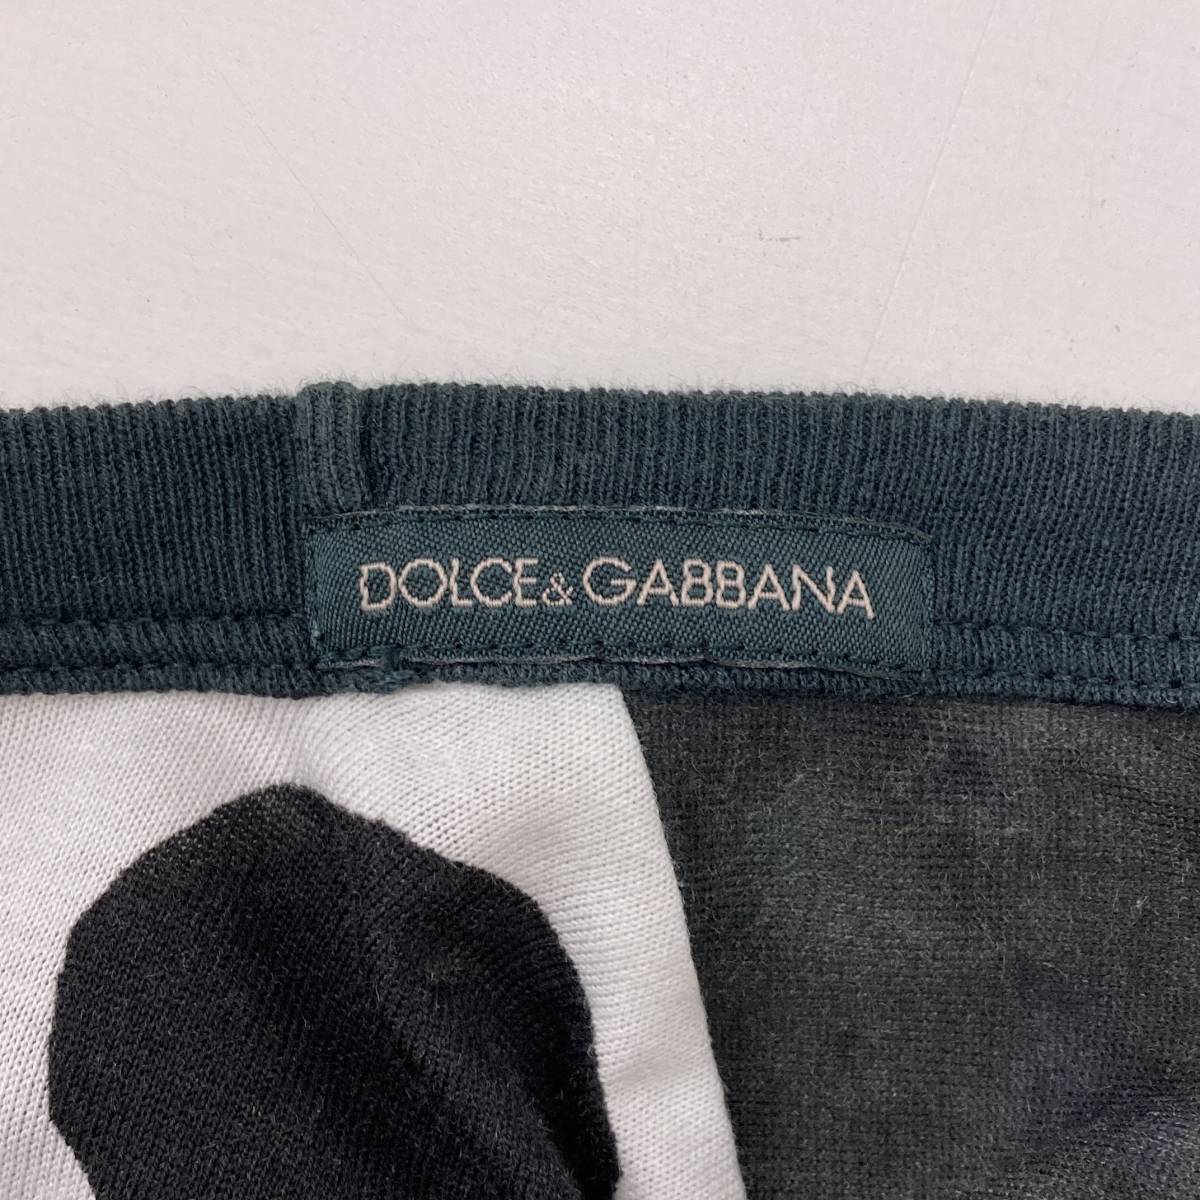 DOLCE&GABBANA 総柄 半袖 Tシャツ Vネック イタリア製 メンズ 46サイズ ドルチェ&ガッバーナ ドルガバ D&G カットソー 3040143_画像6